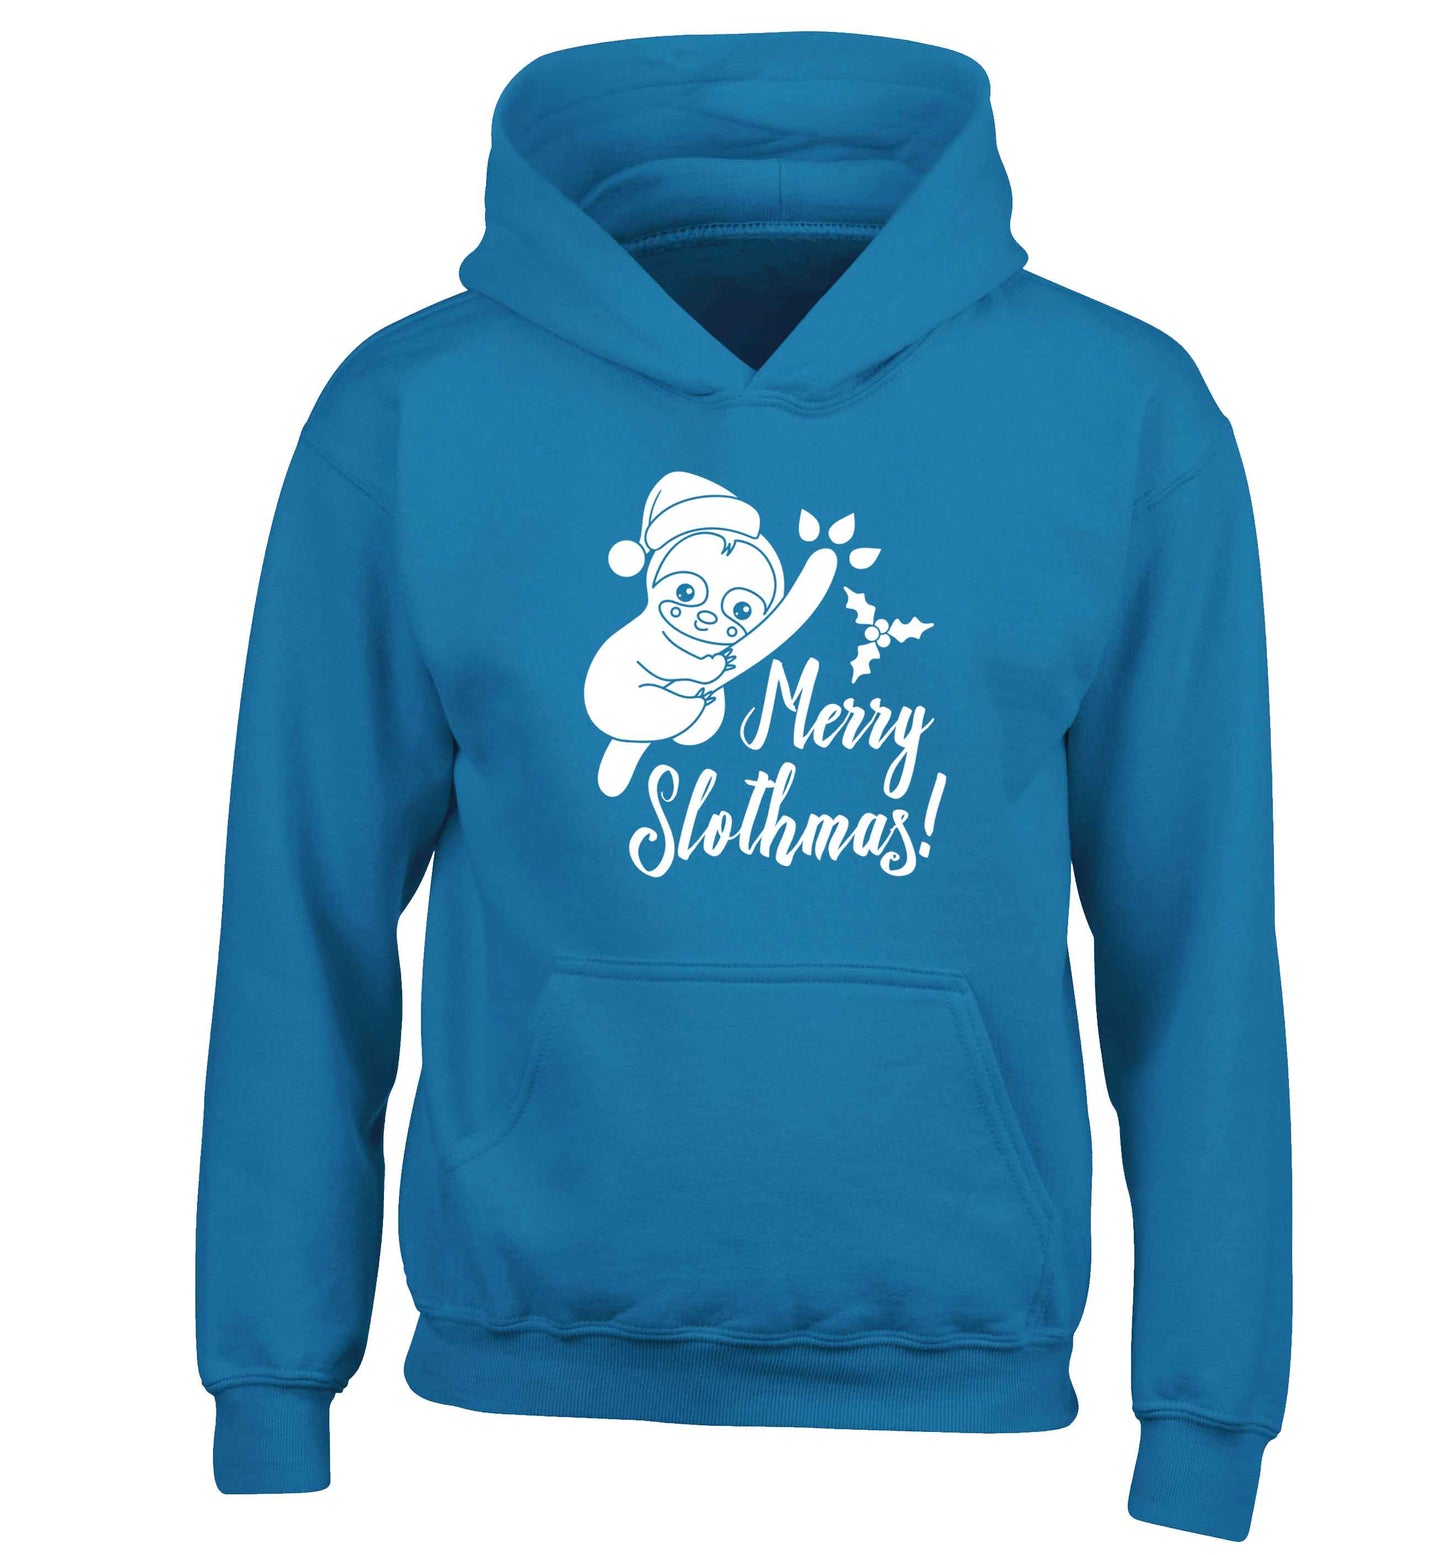 Merry Slothmas children's blue hoodie 12-13 Years